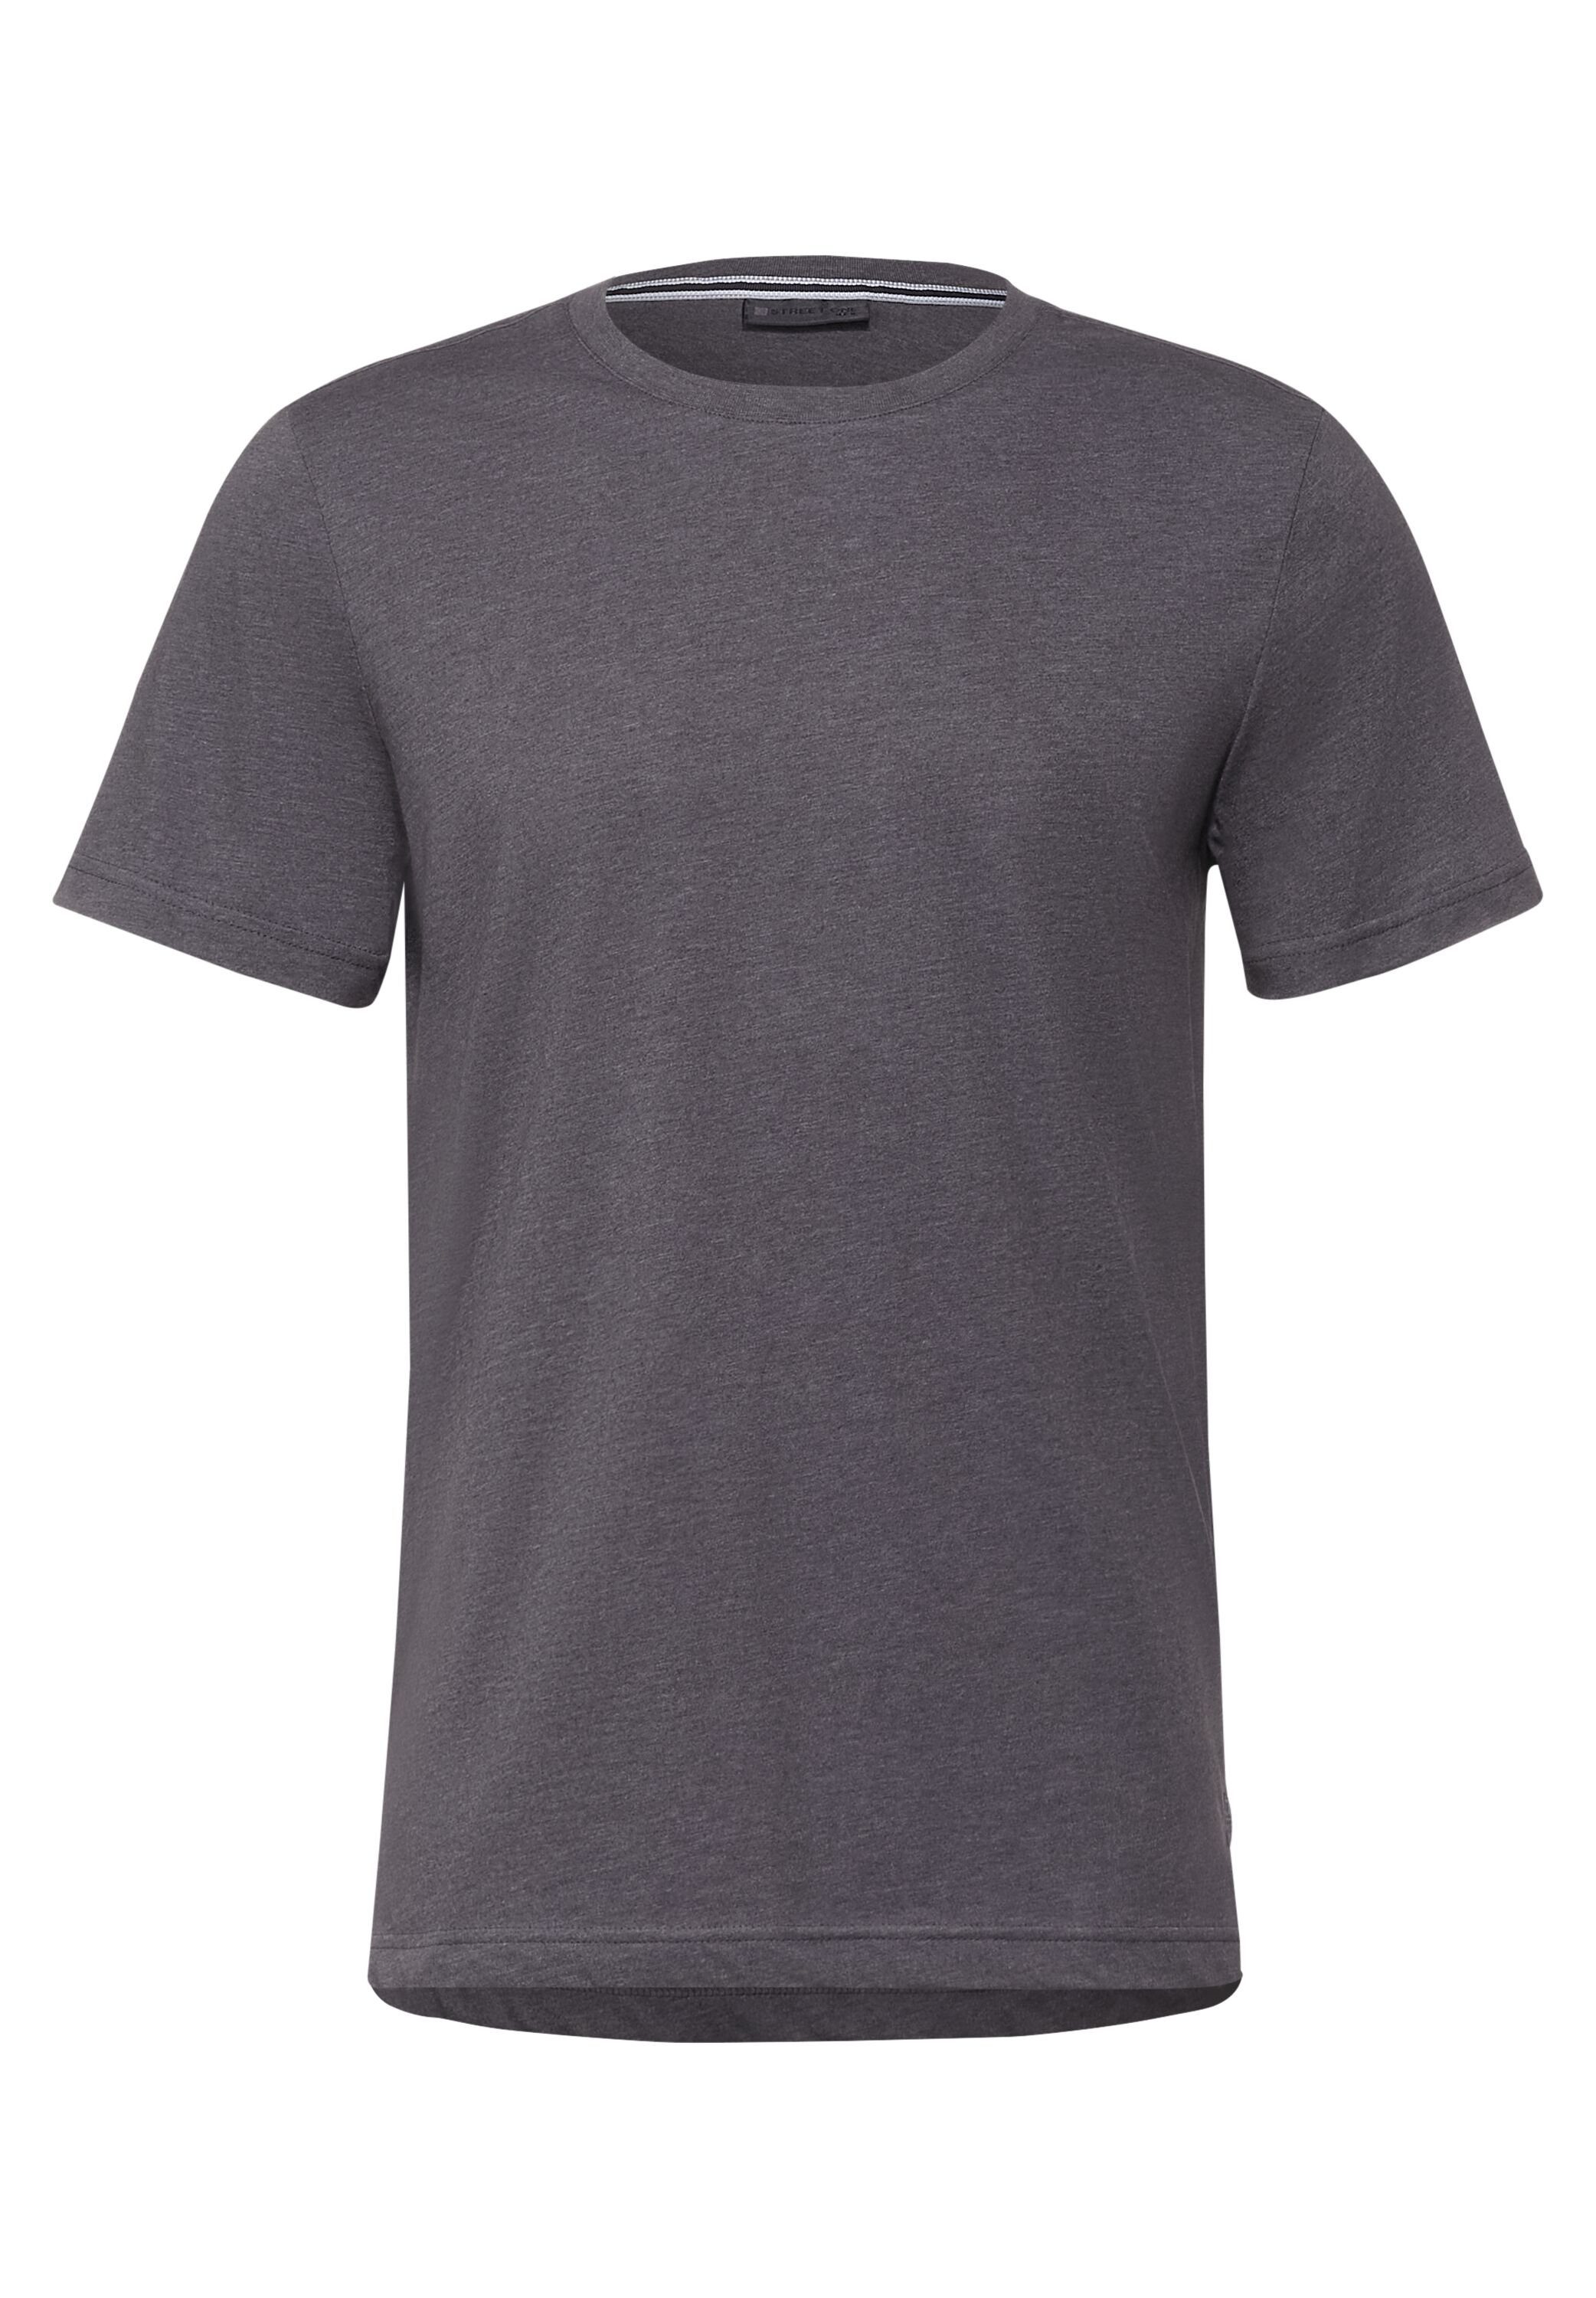 coal grey T-Shirt MEN Optik Melange melange STREET in ONE